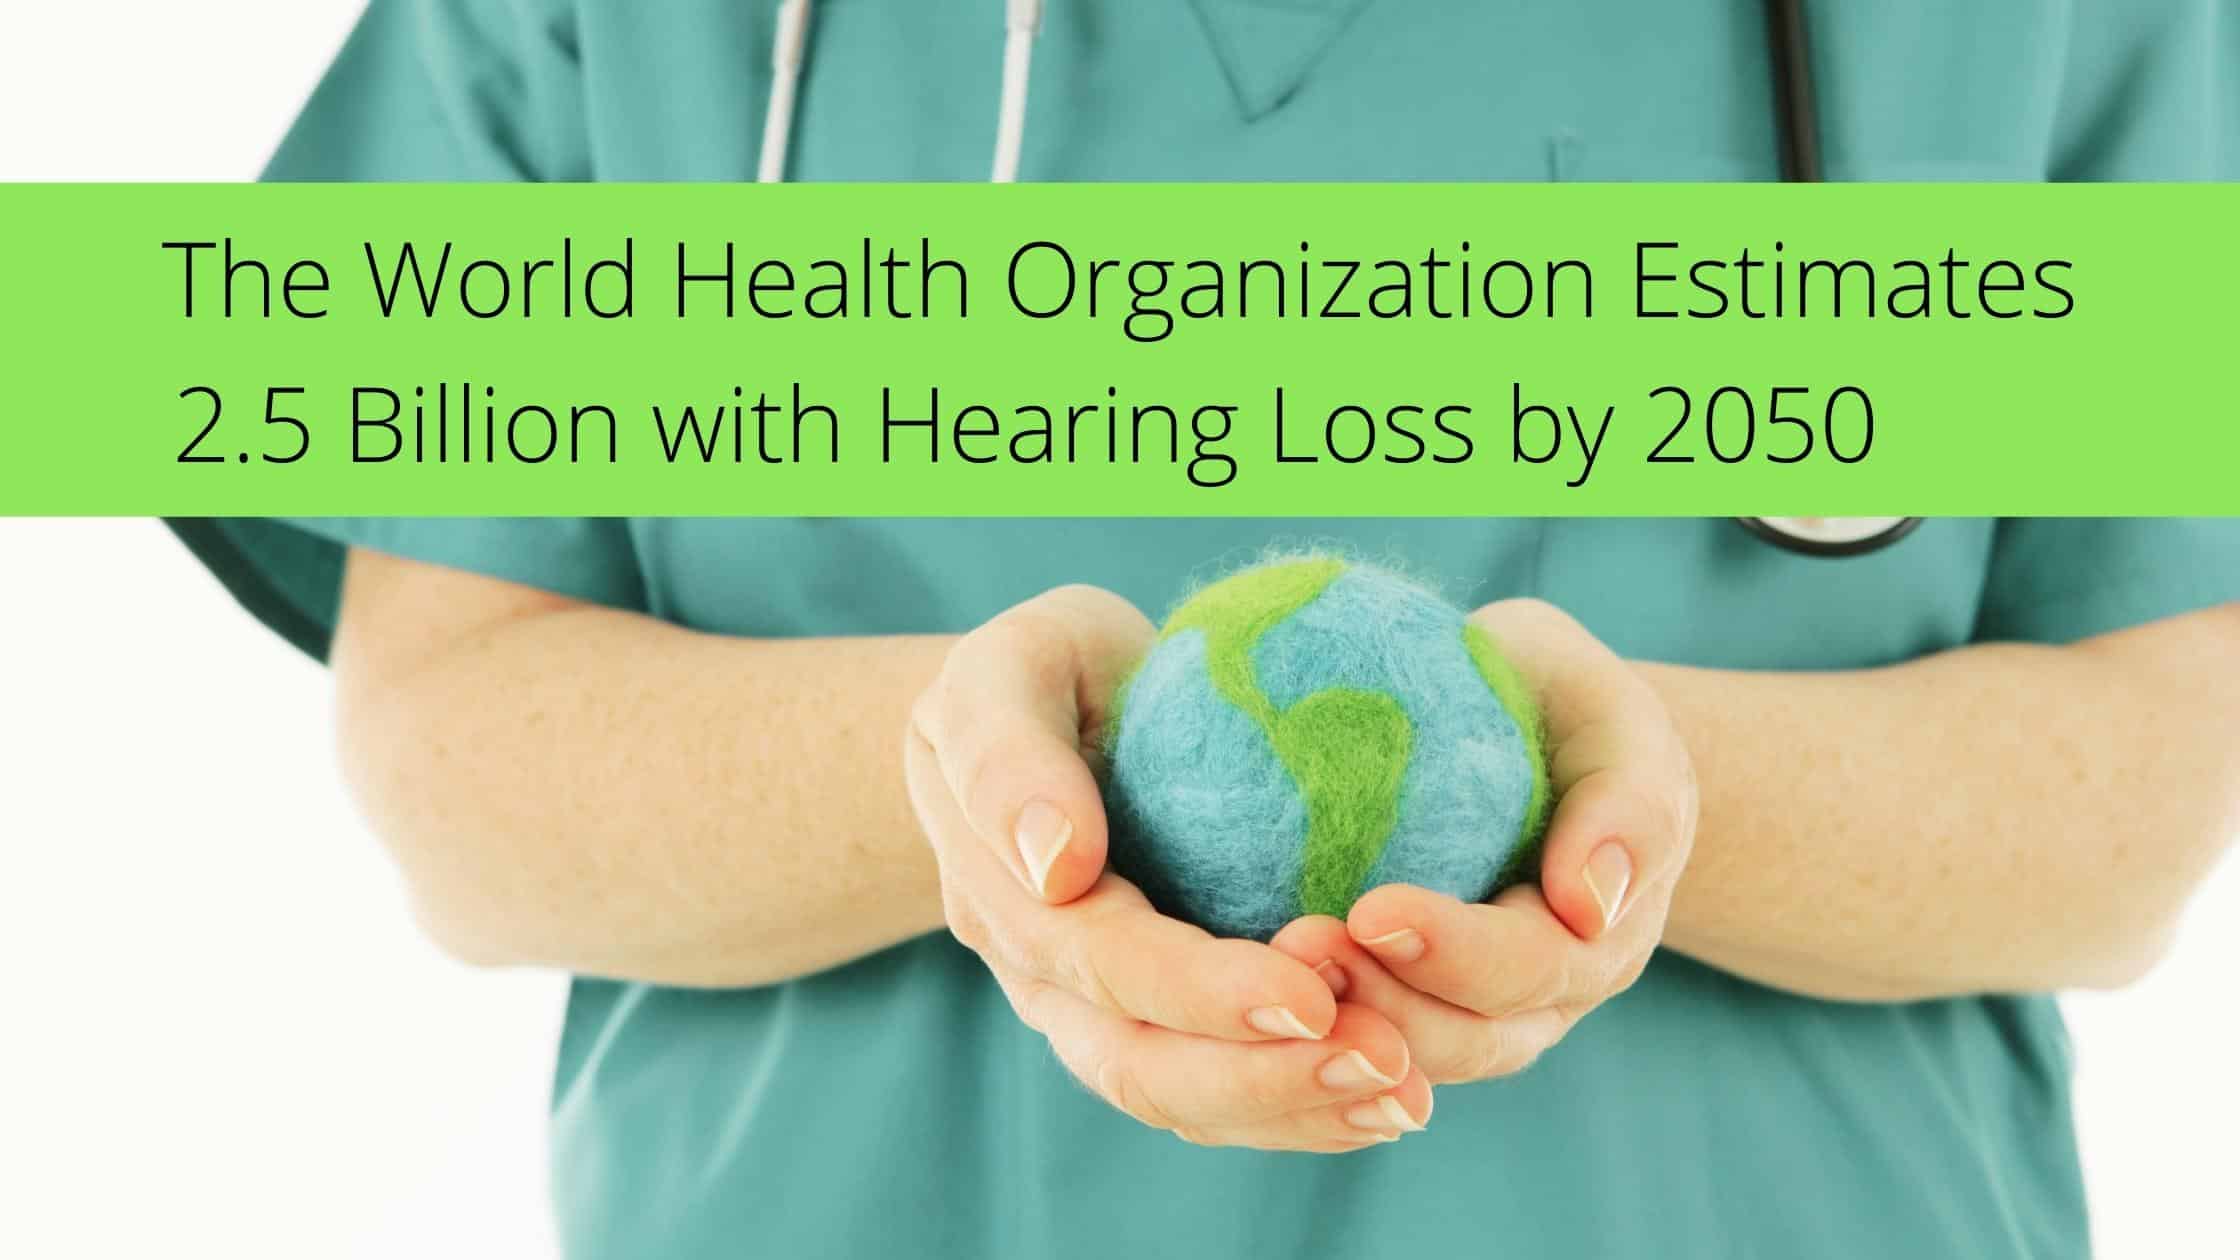 The World Health Organization Estimates 2.5 Billion with Hearing Loss by 2050